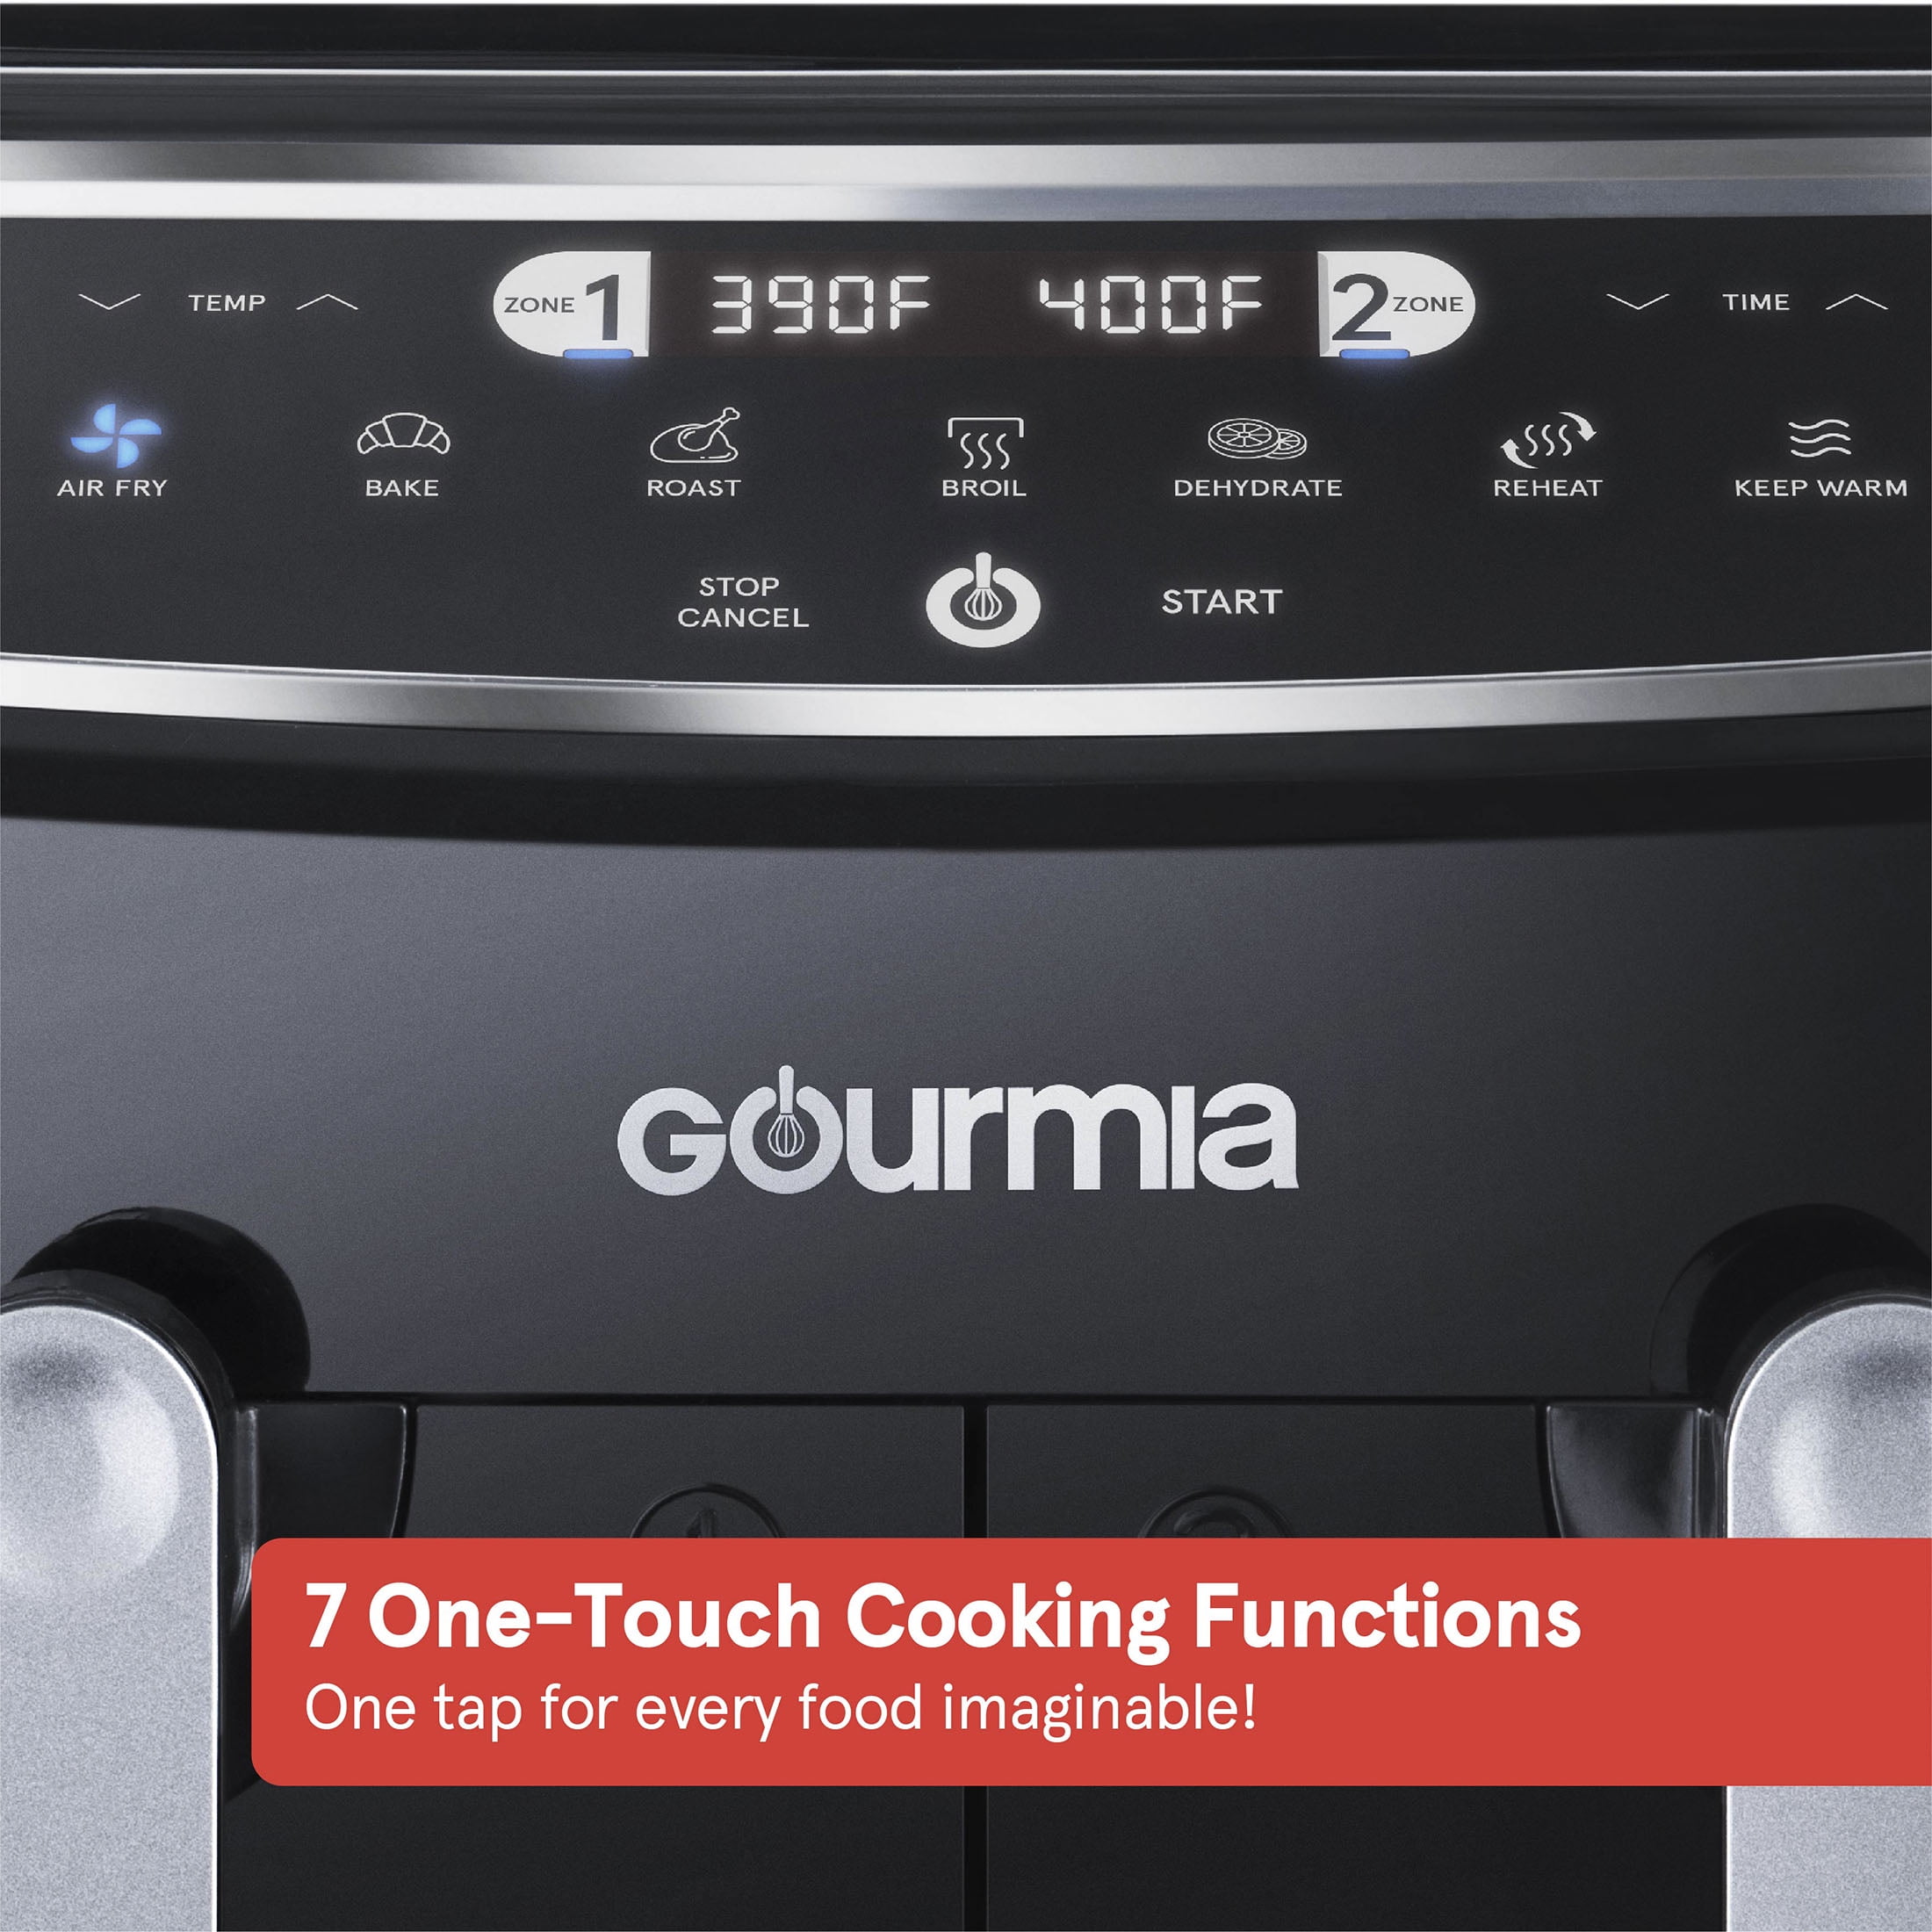 Gourmia 2.2 Qt Air Fryer with Dishwasher Safe Basket, White GAF236 